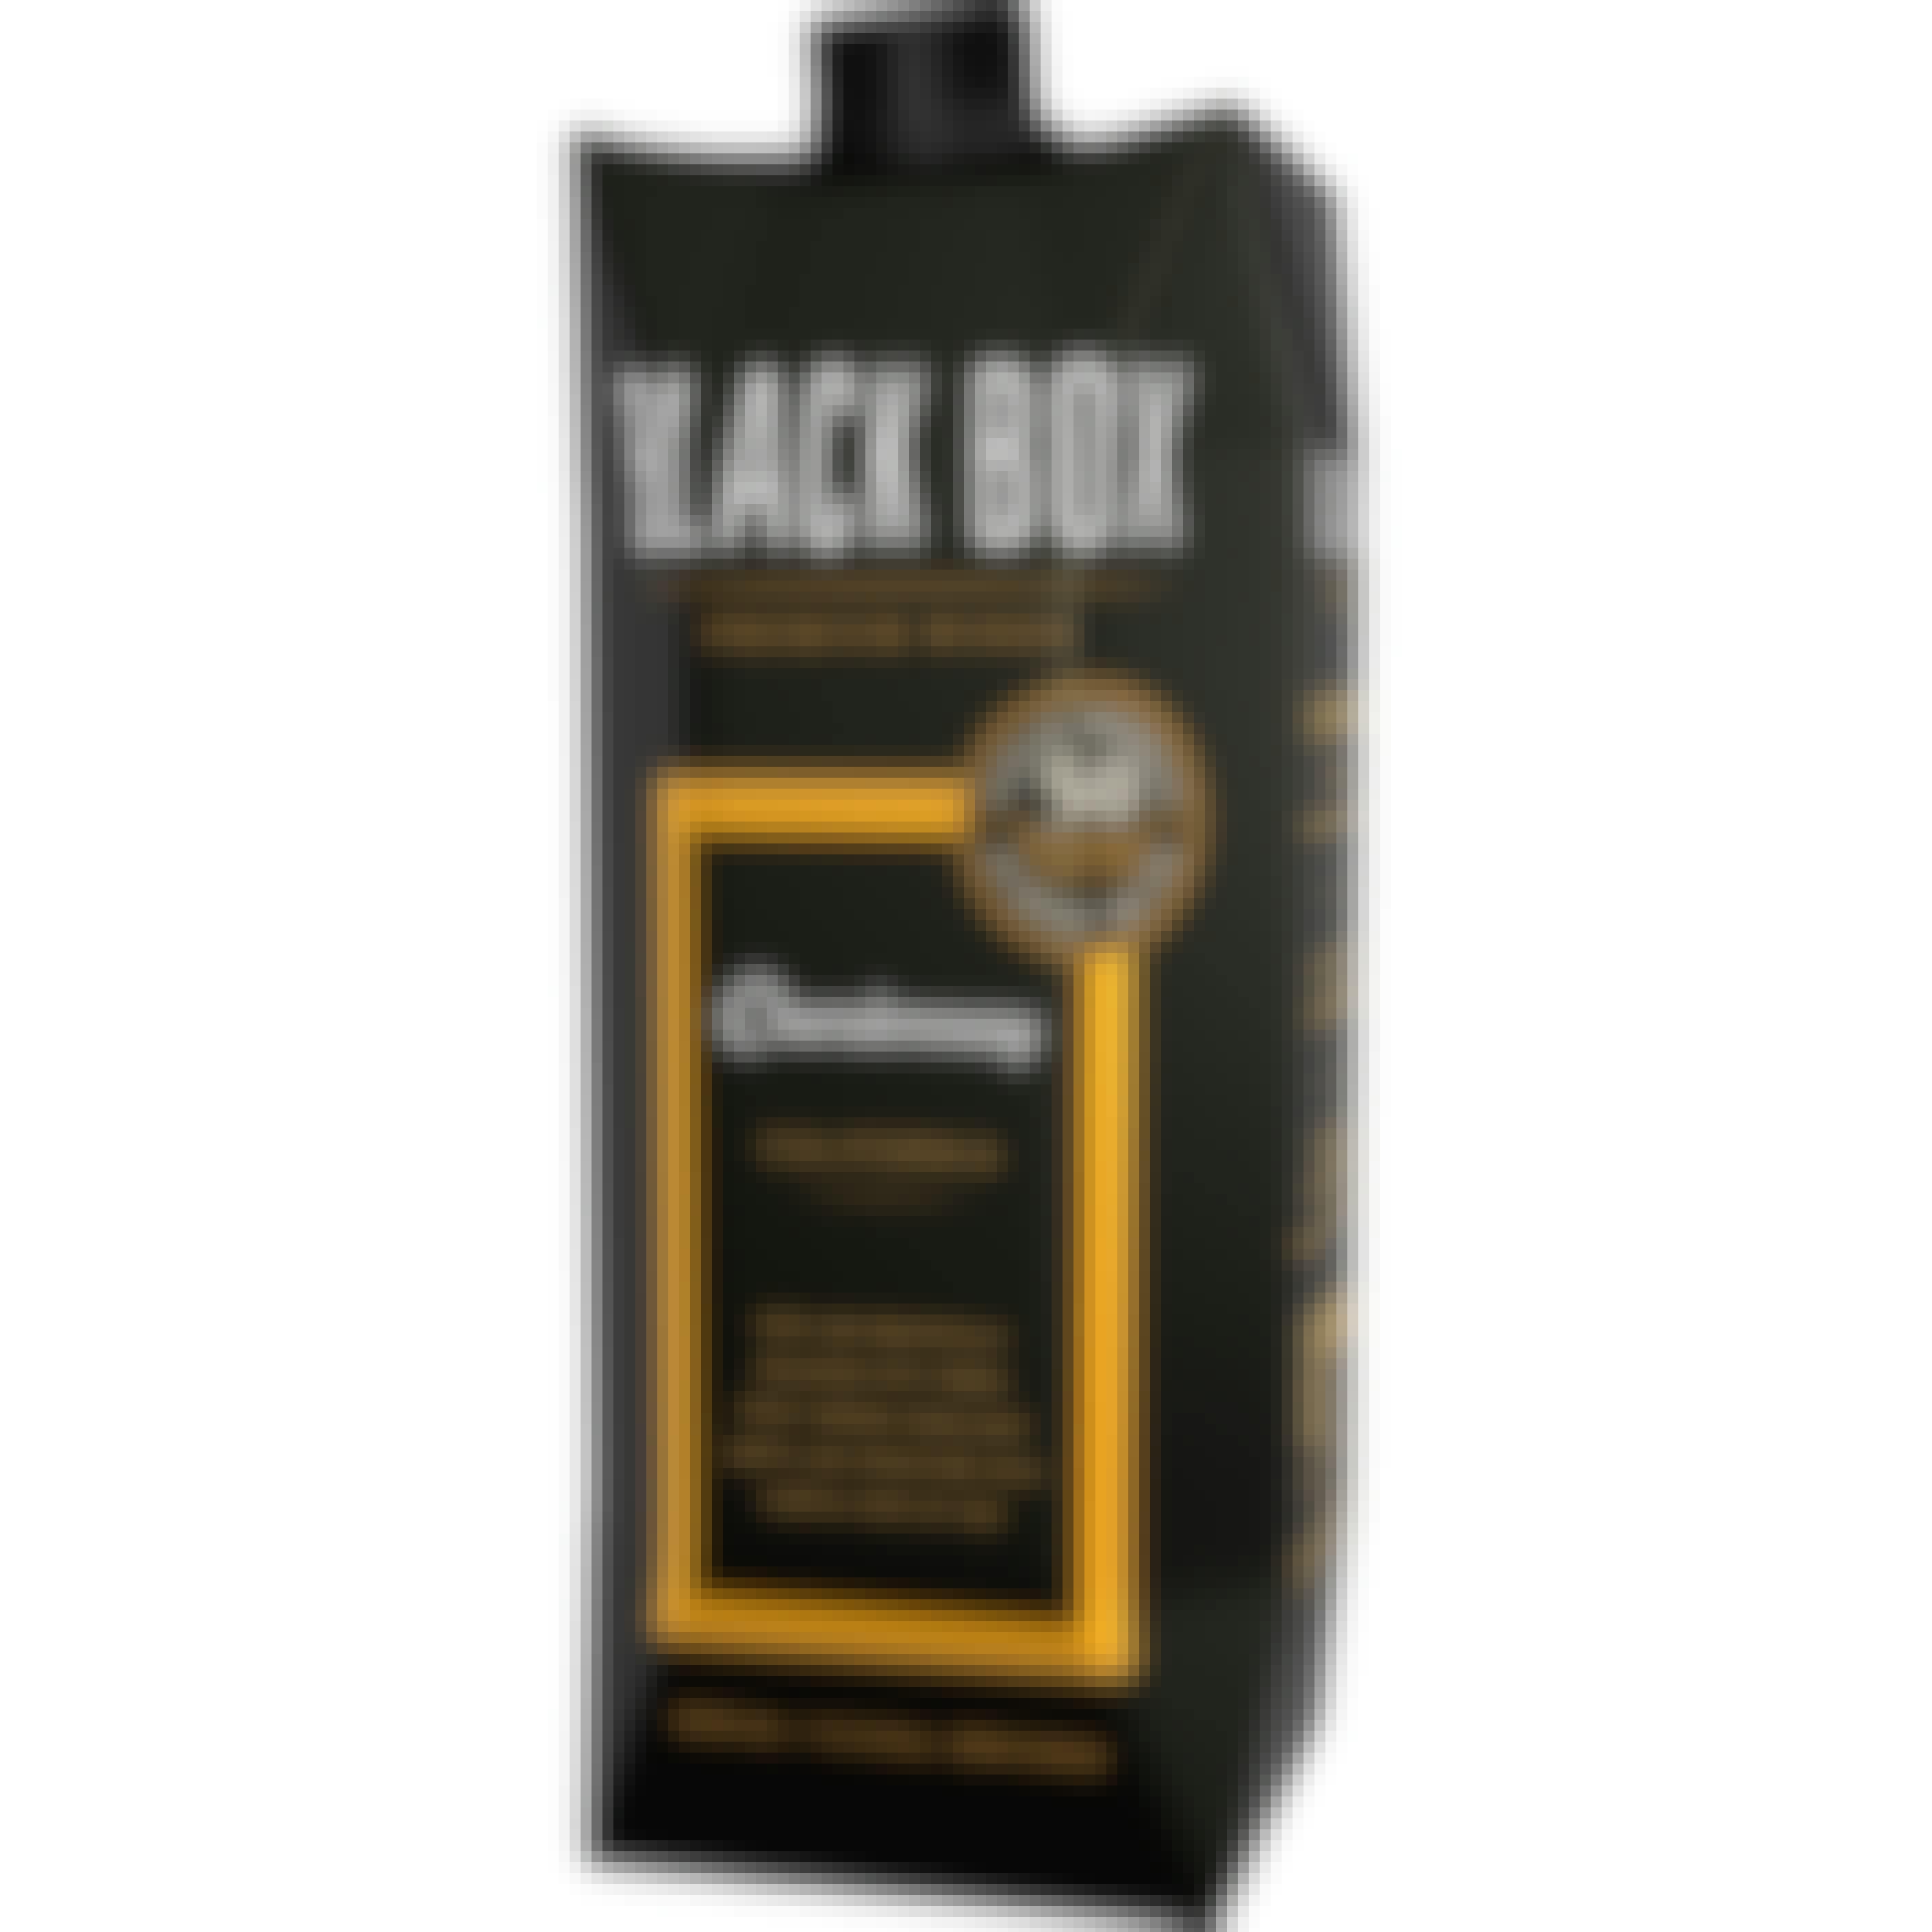 Black Box Chardonnay 500ml